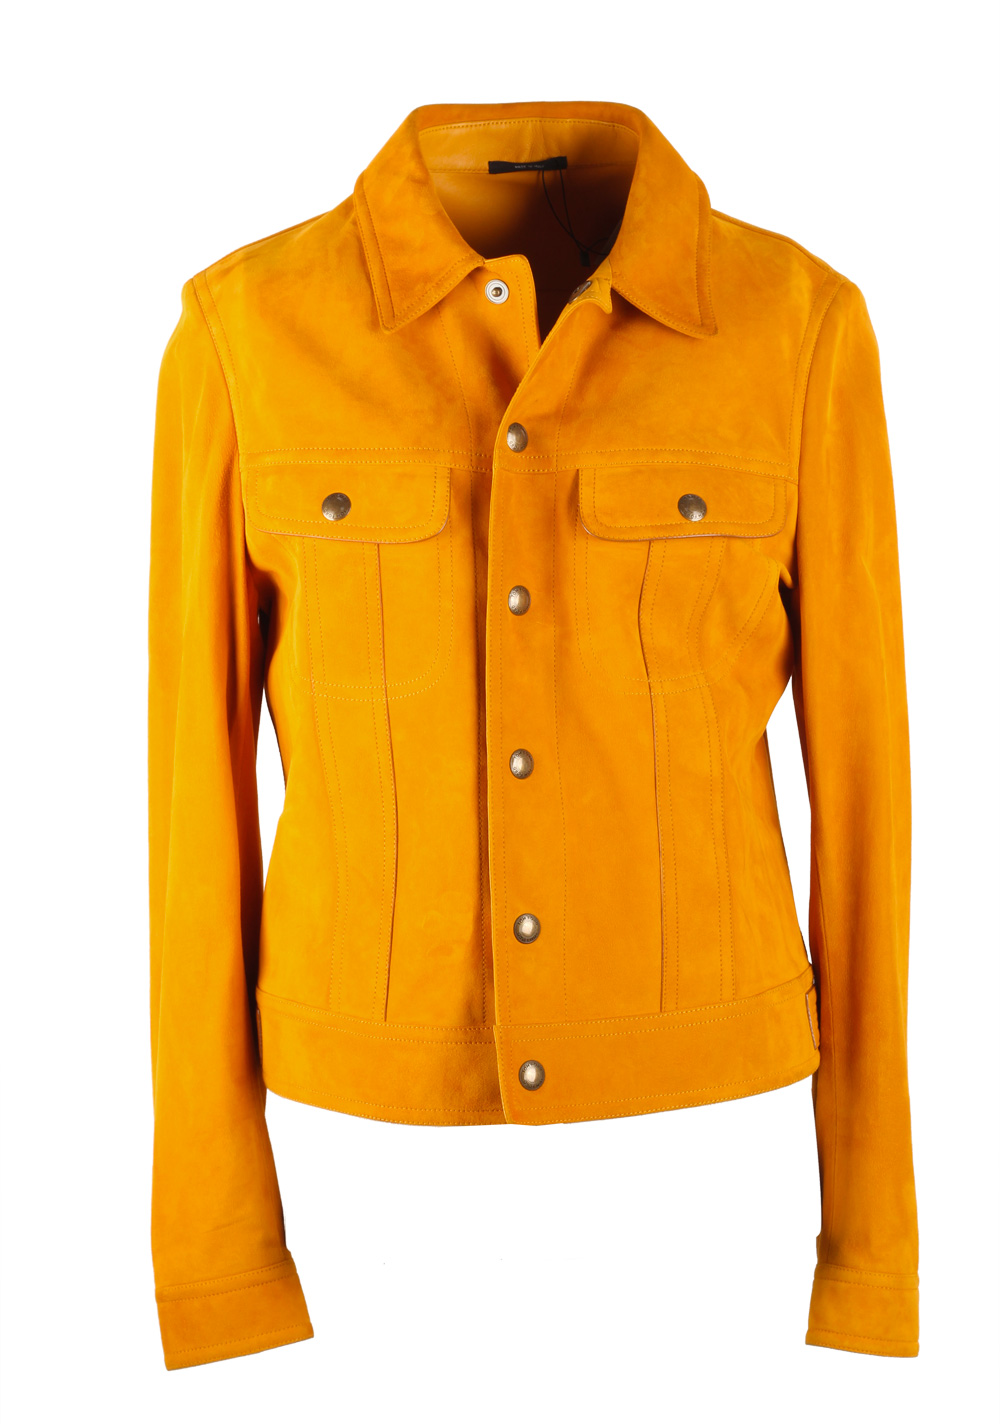 Western Brown | U.S. TOM Jacket / Limité Size Coat Costume 38R 48 FORD